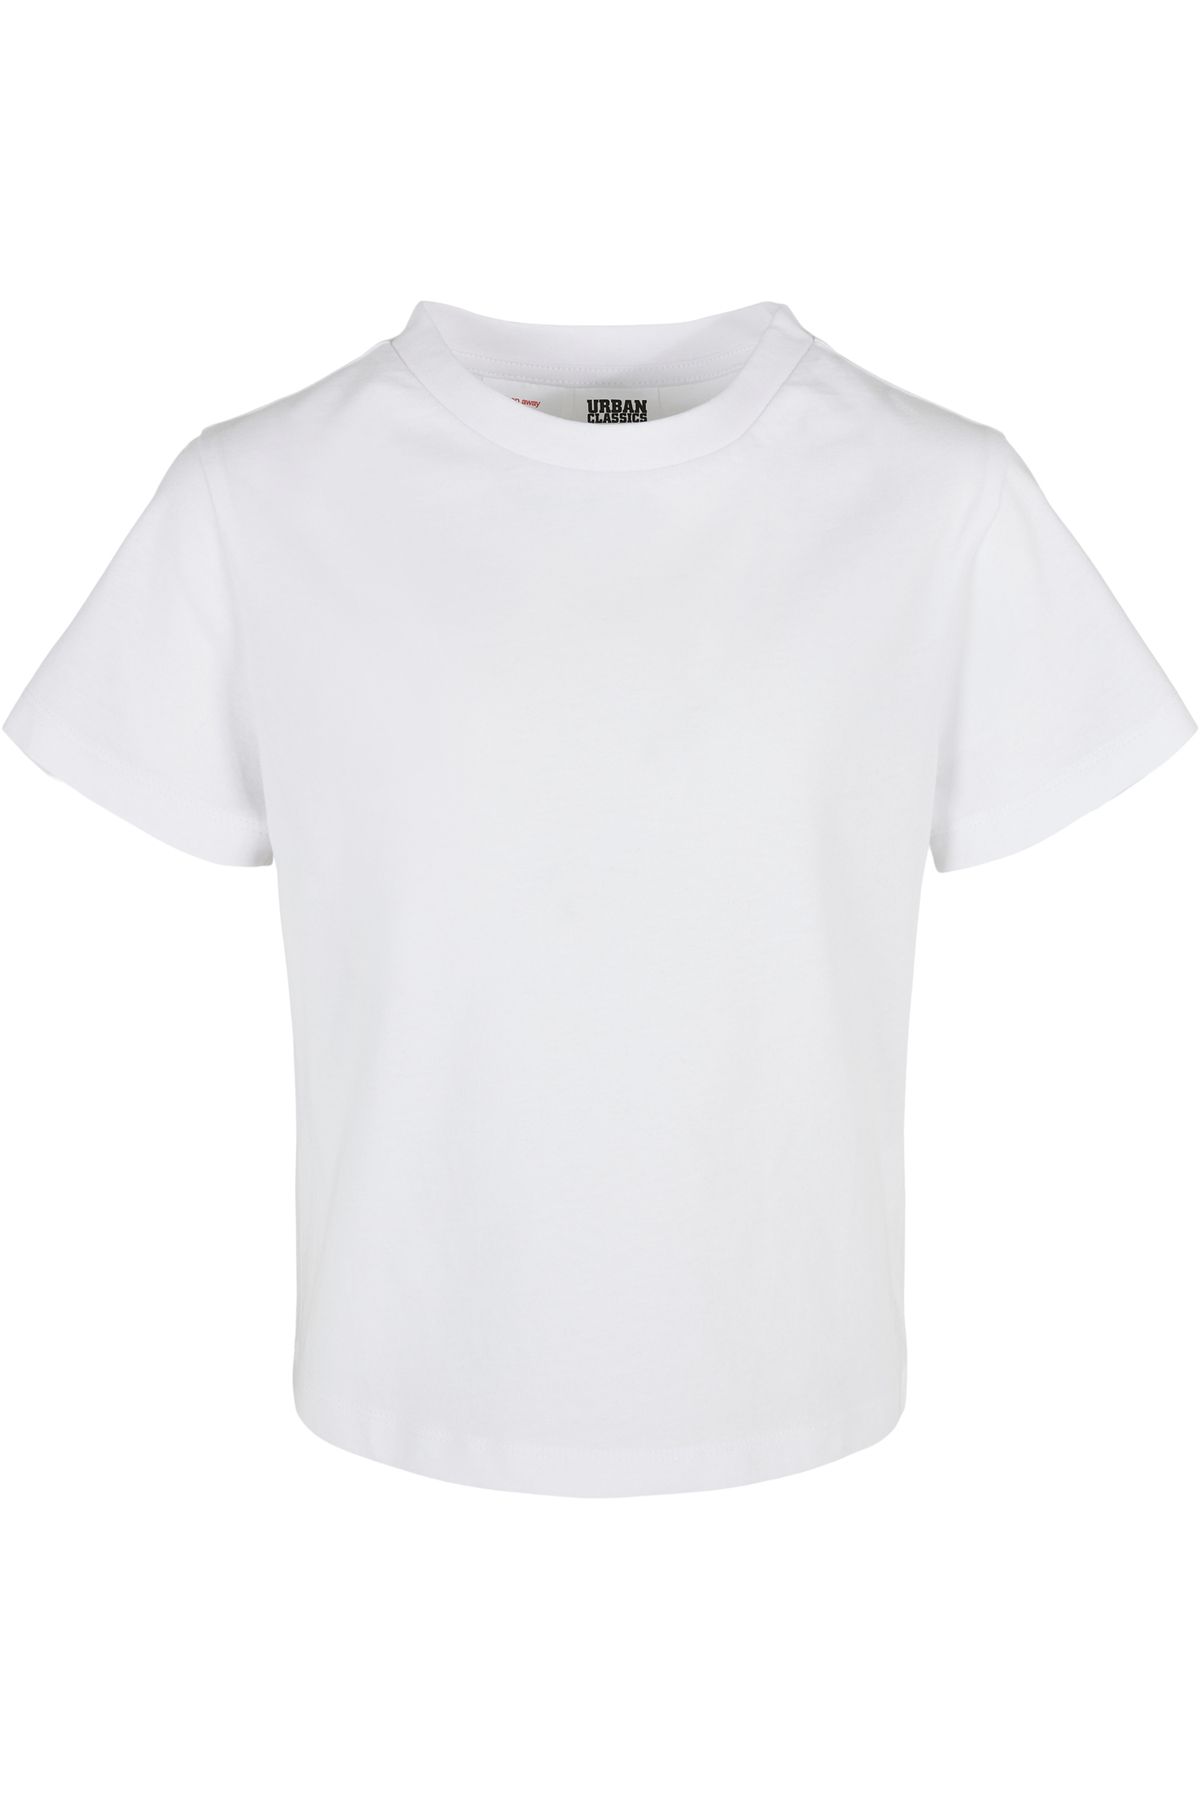 Urban Classics Kinder-Mädchen-Basic-Box-T-Shirt Trendyol 